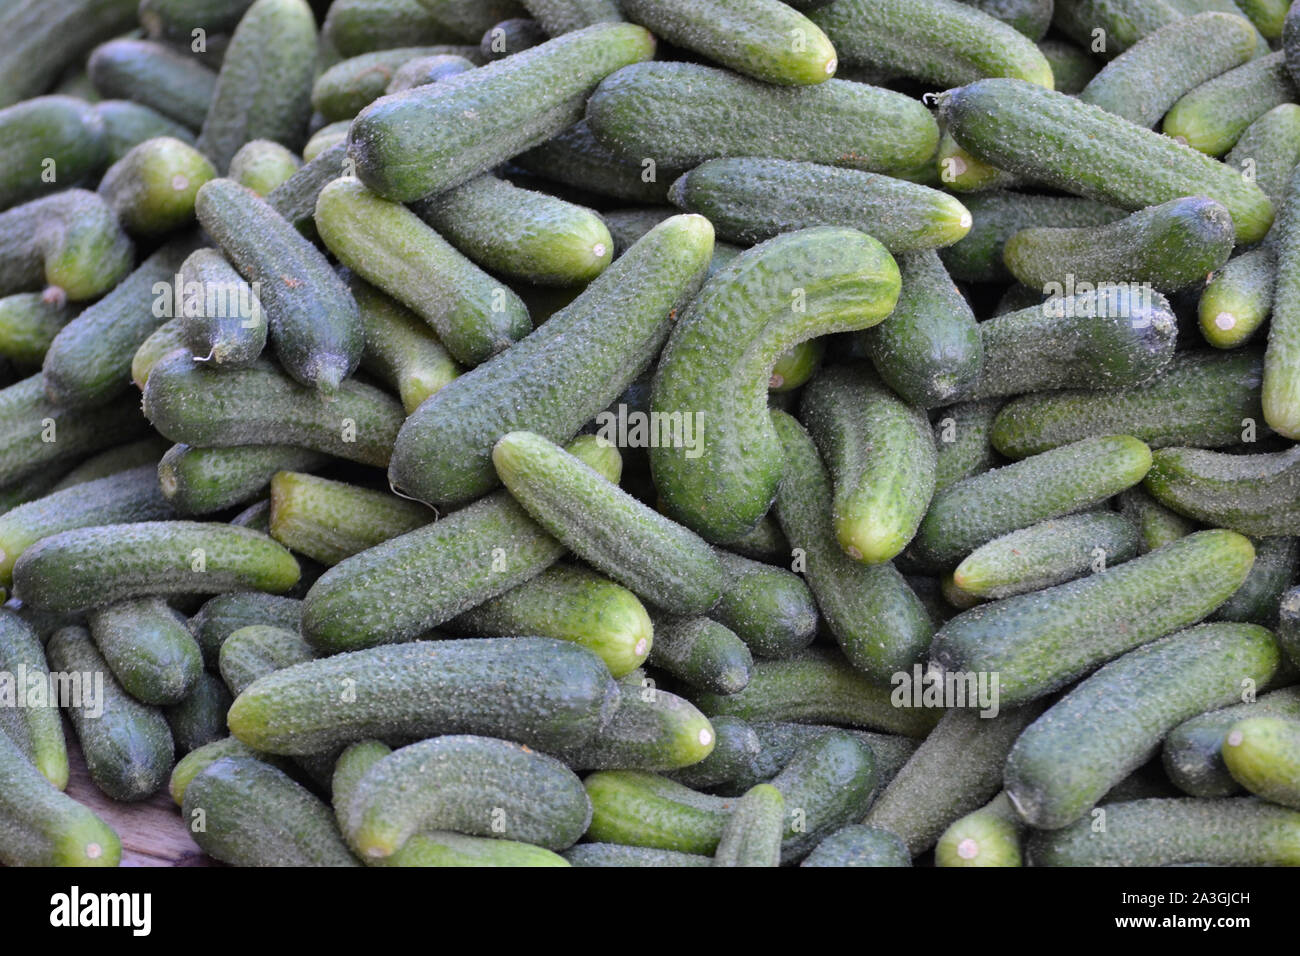 Pickling cucumbers Stock Photo